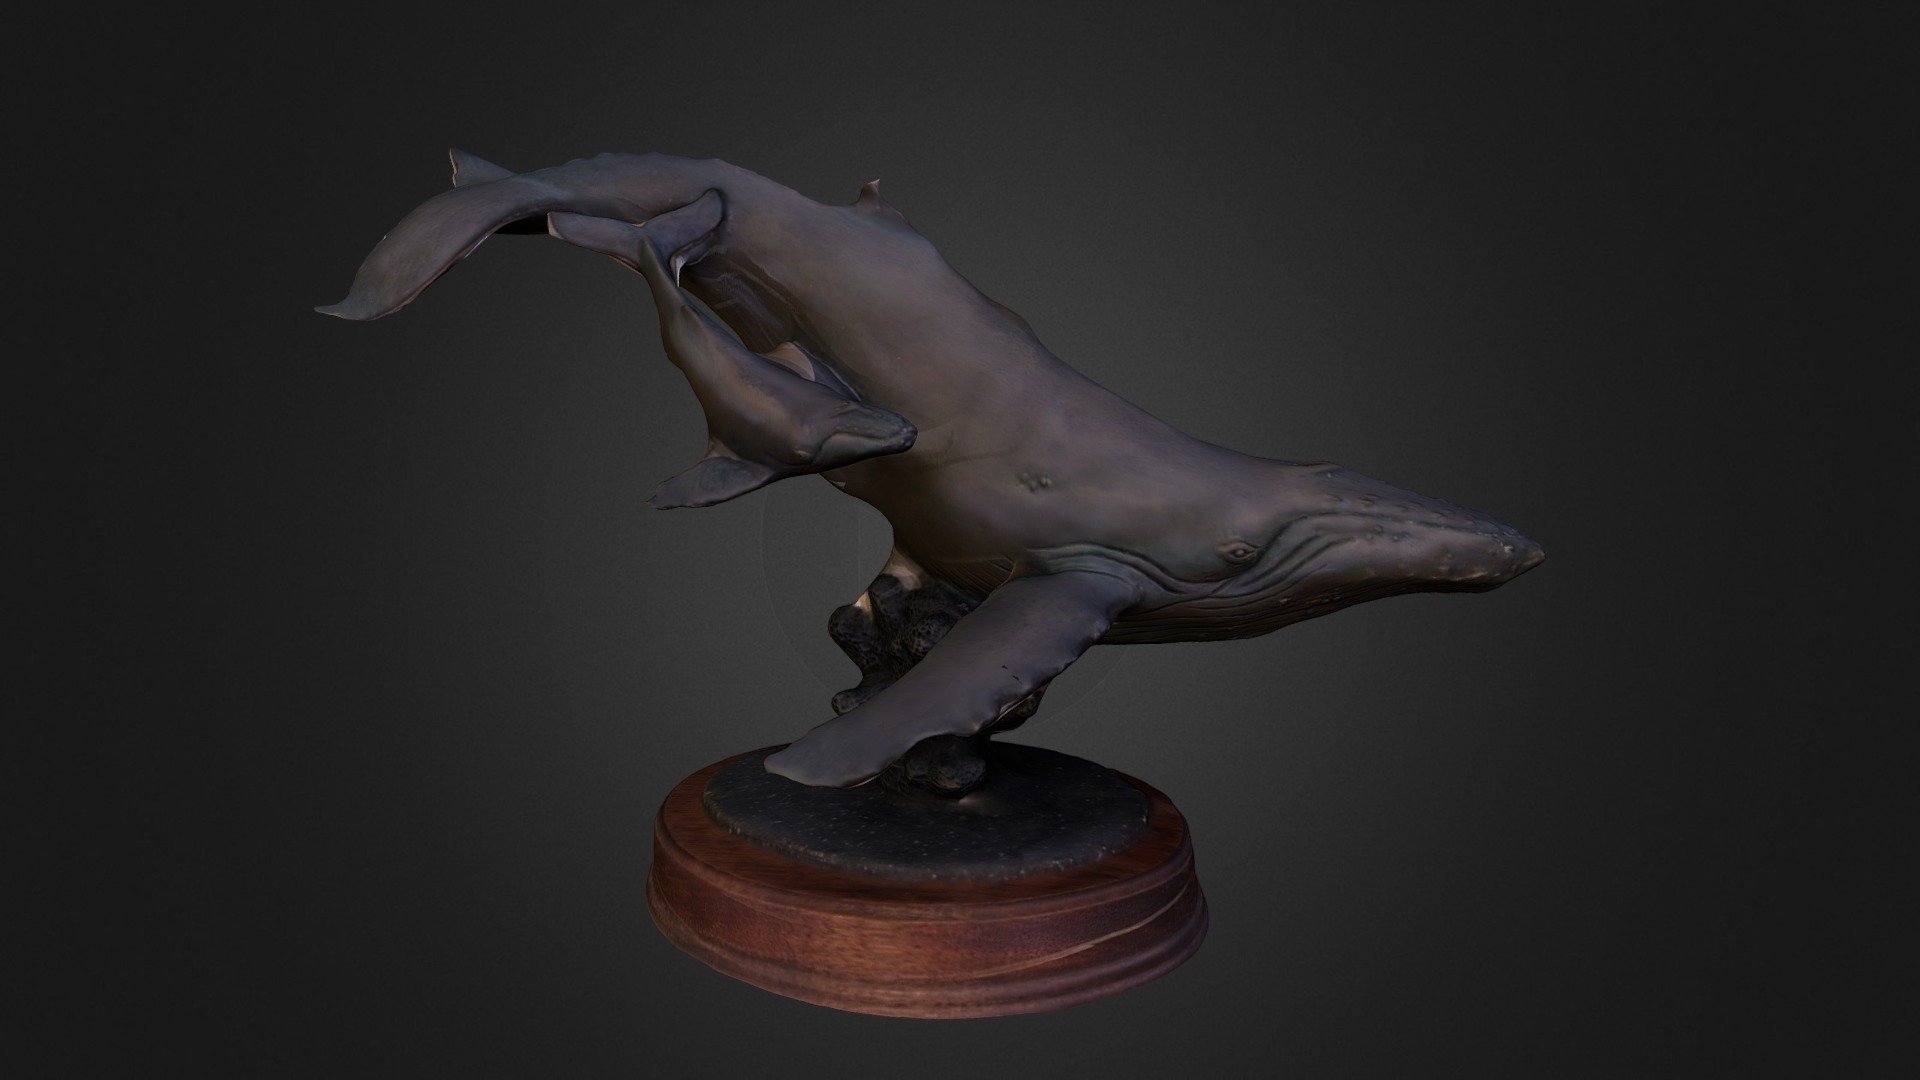 L153B OCEAN EXPLORERS
我的收藏品 之二  年少時購於「自然野趣」自然書屋 - Humpback Whale bronze sculpture 座頭鯨青銅雕塑 - 3D model by mark.energy 3d model